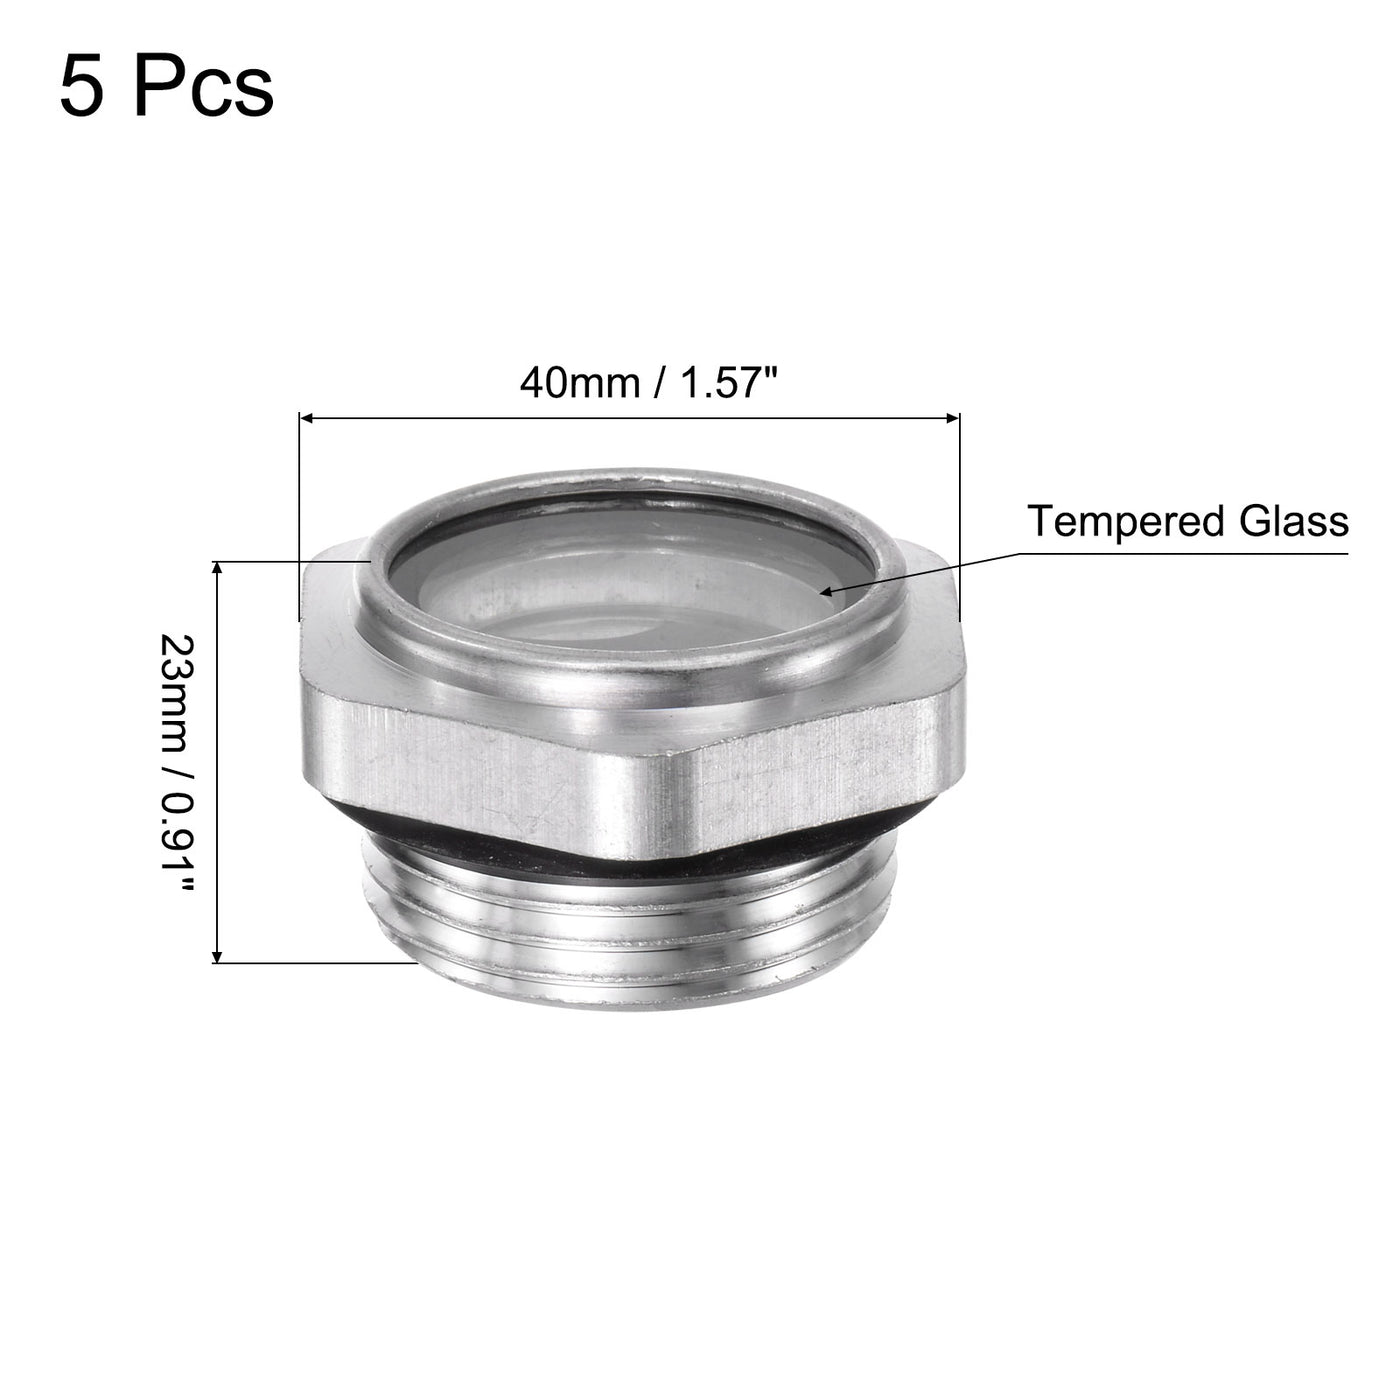 uxcell Uxcell Air Compressor Oil Level Gauge Sight Glass G1 Male Thread Aluminum 5Pcs